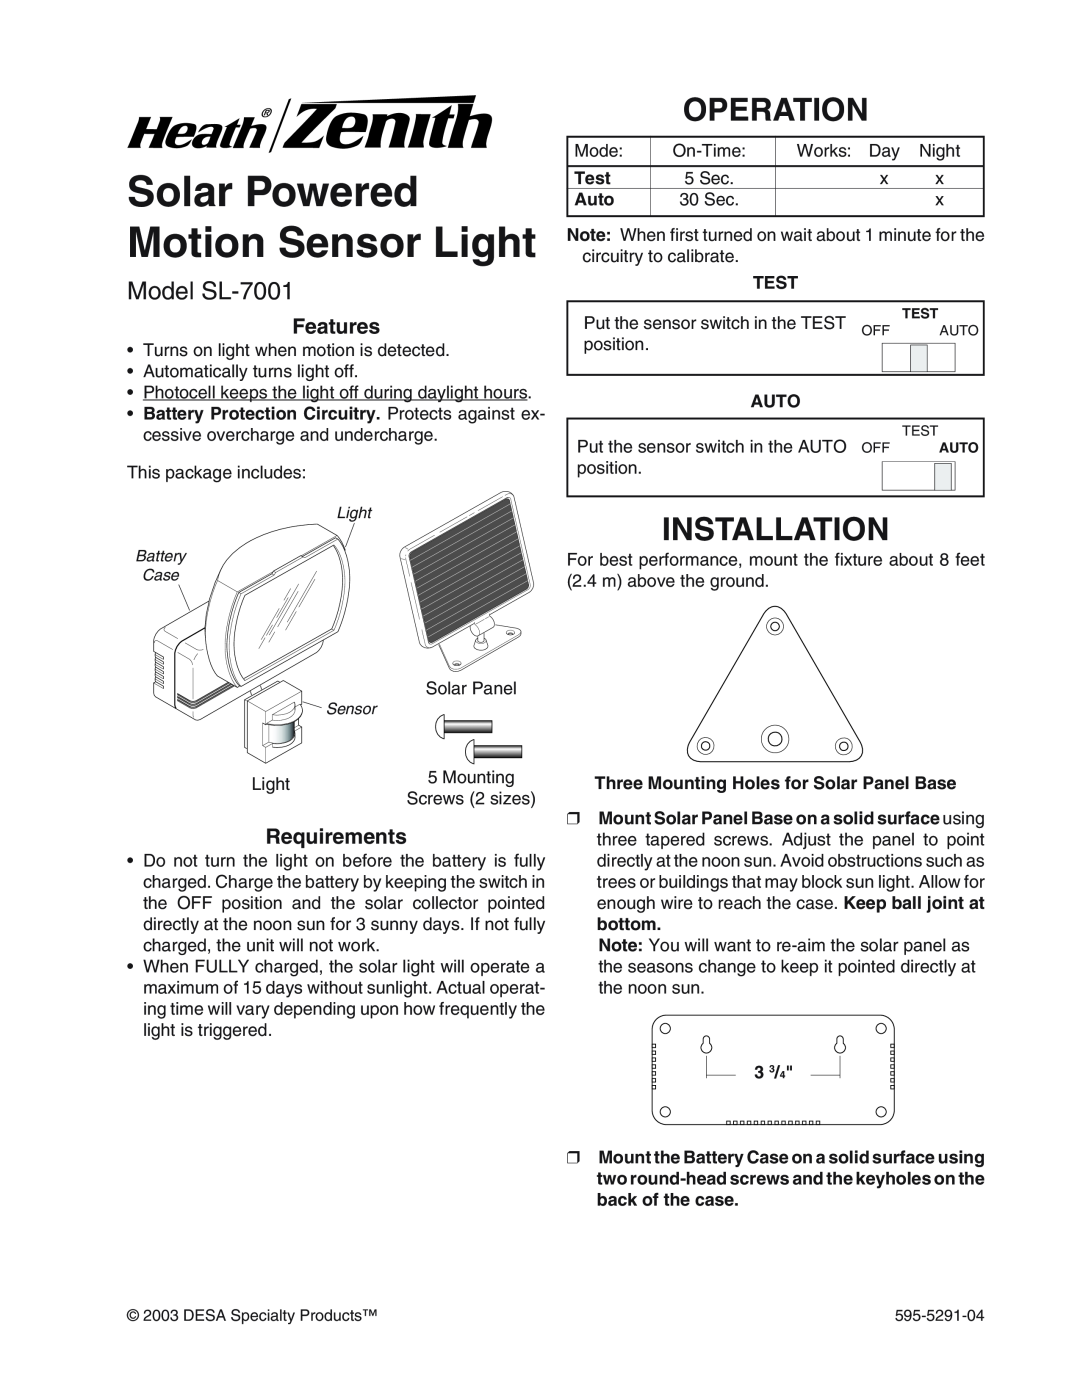 Heath Zenith manual Solar Powered Motion Sensor Light, Operation, Installation, Model SL-7001, Features, Requirements 